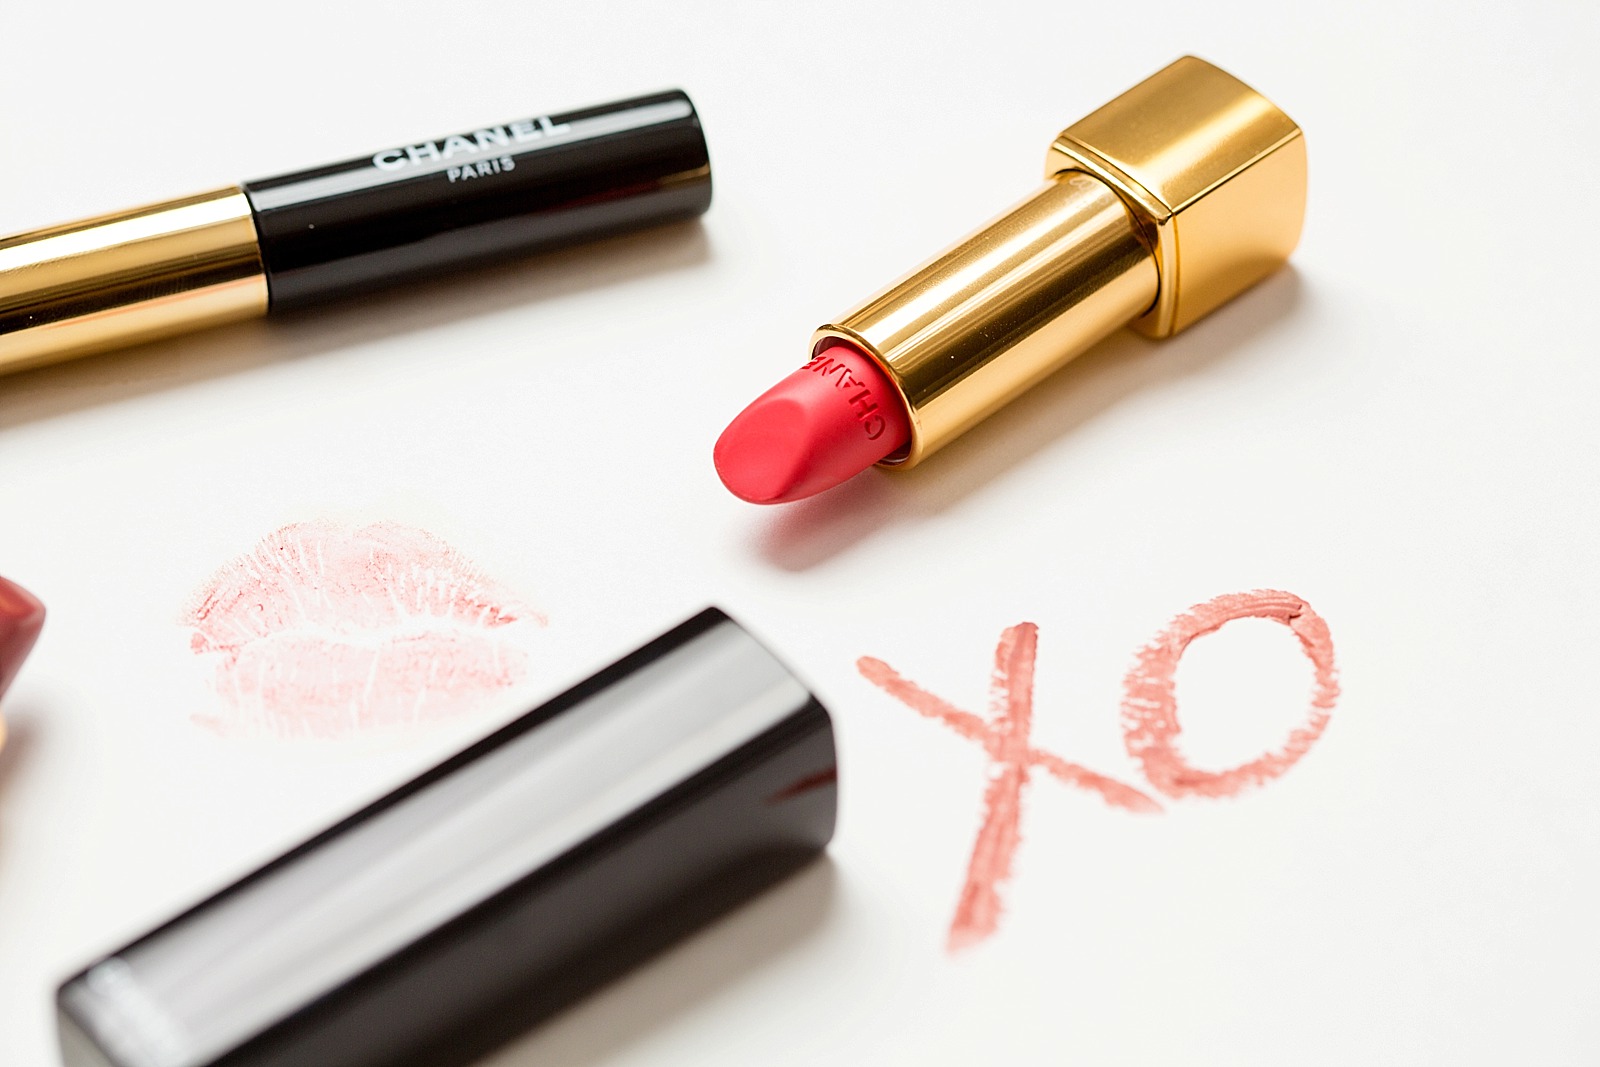 Chanel Rouge Double Intensite Ultra Wear Lip Colour: 5 Application